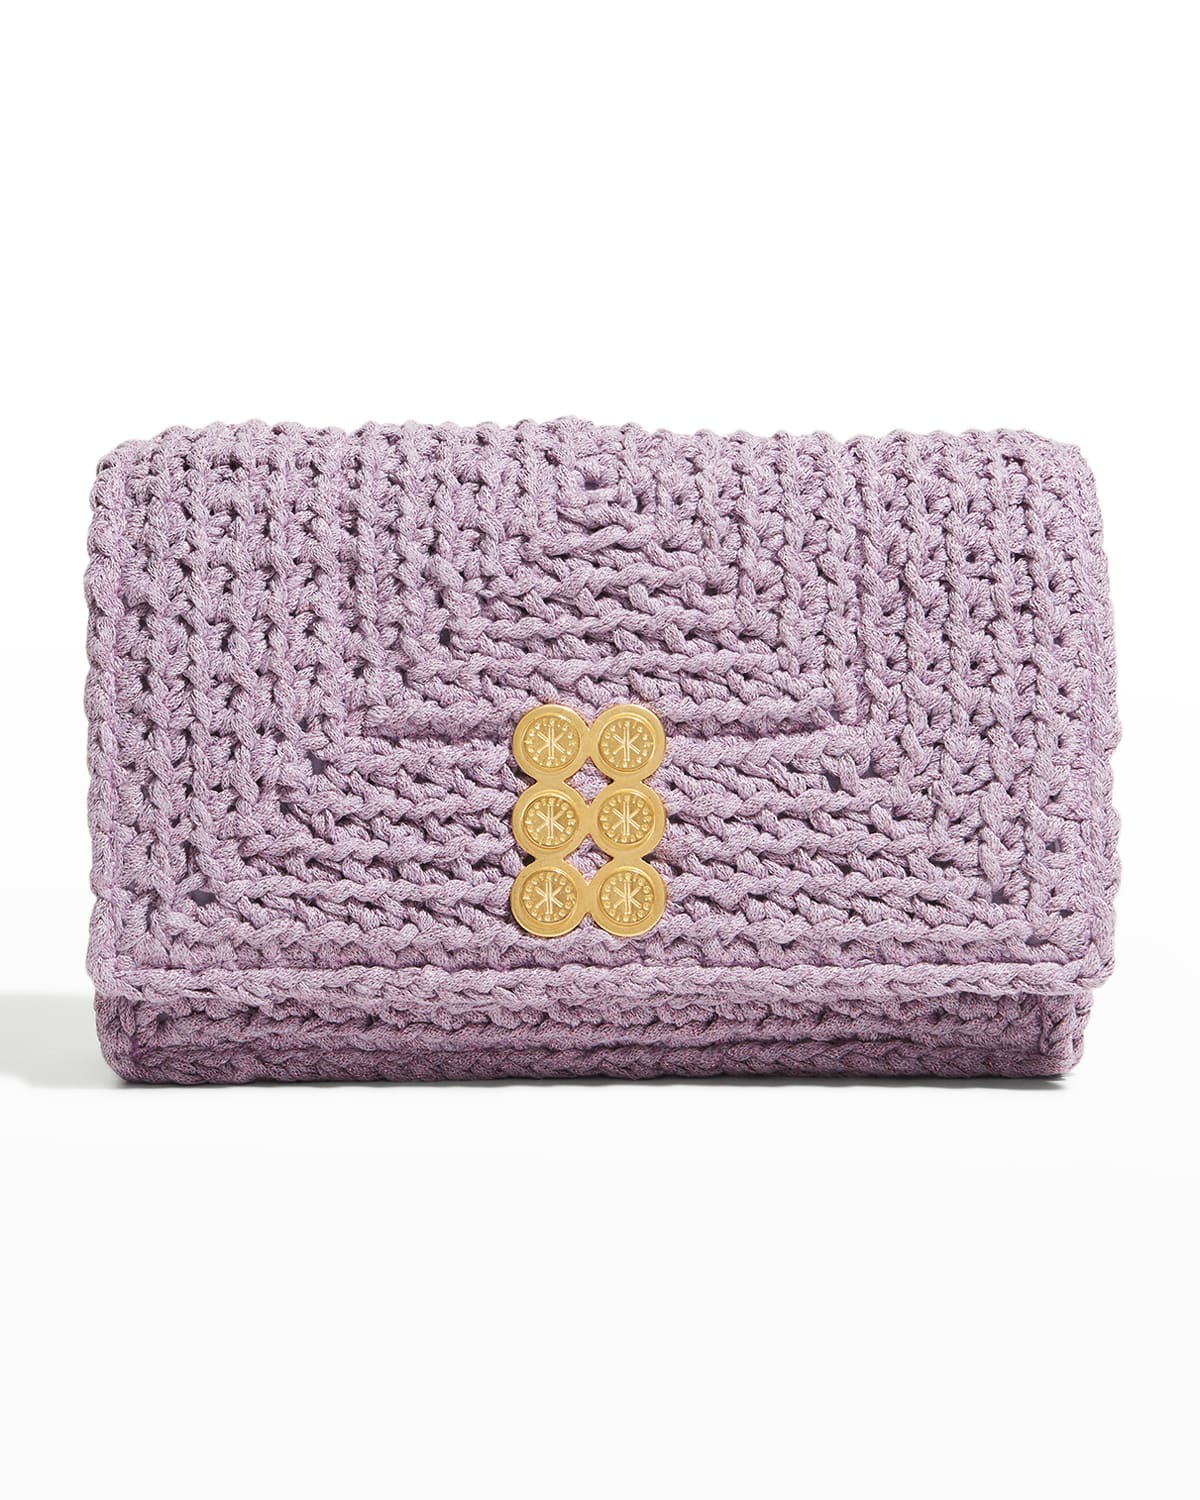 Kooreloo Crochet Flap Chain Shoulder Bag